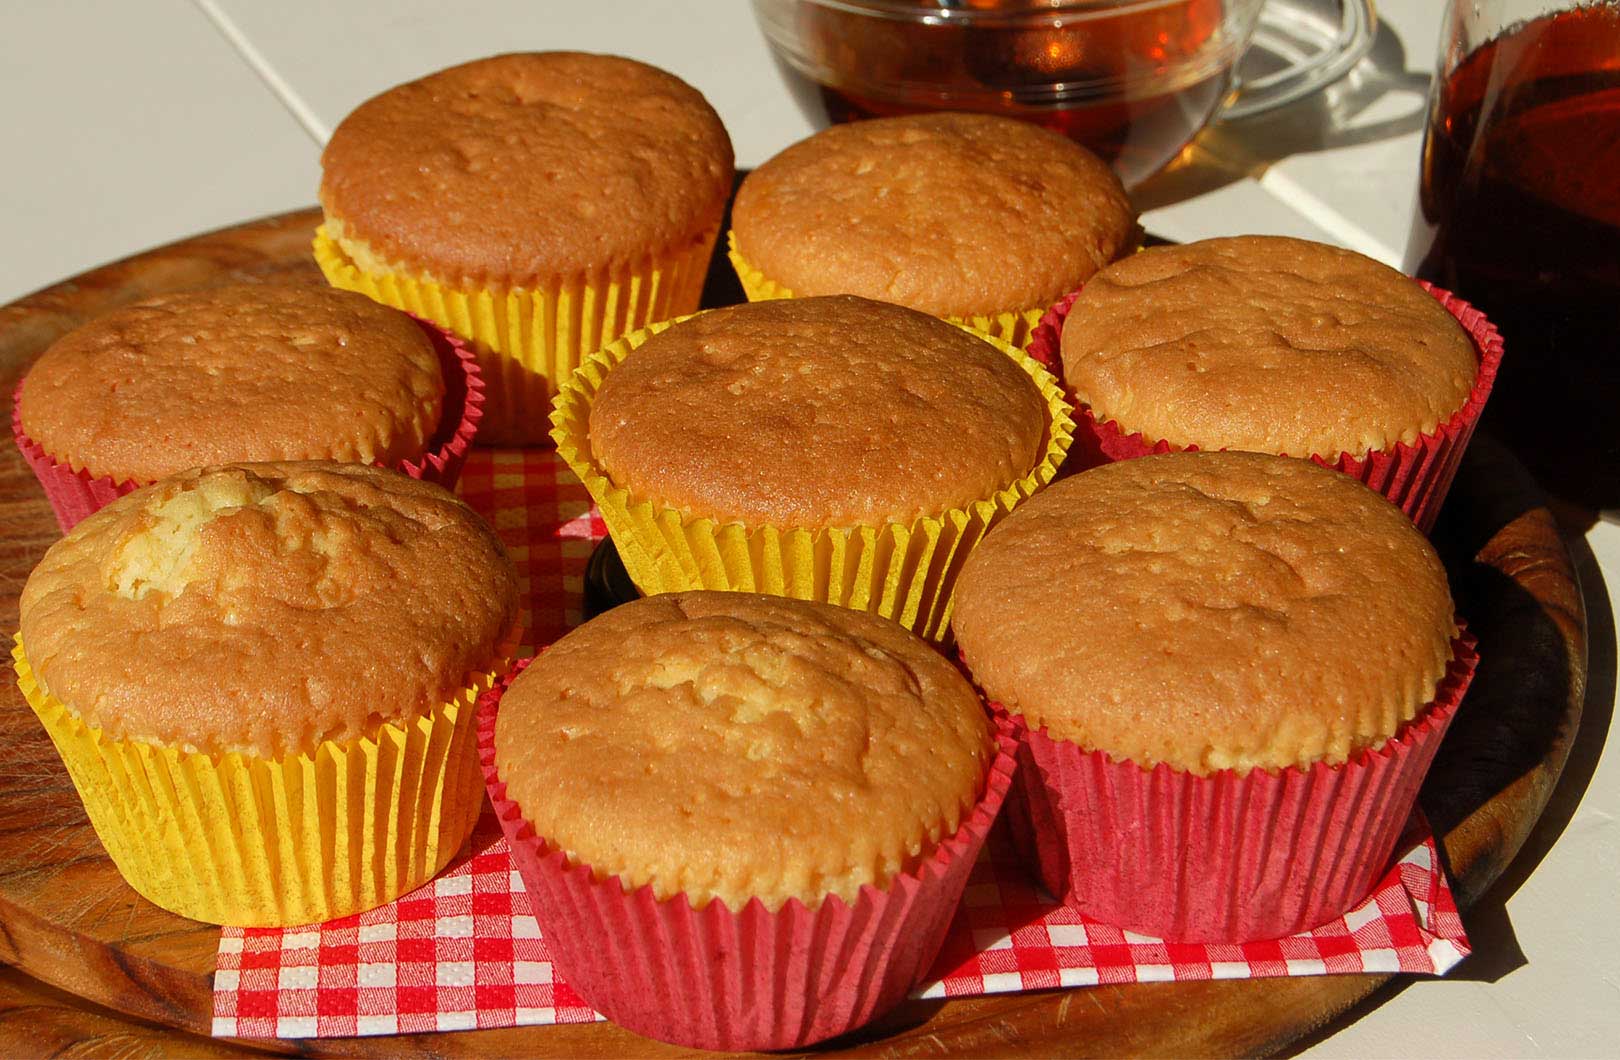 vandaag vergaan aantrekken Kleine cakejes van Koopmans Boerencake - Recept - Koopmans.com